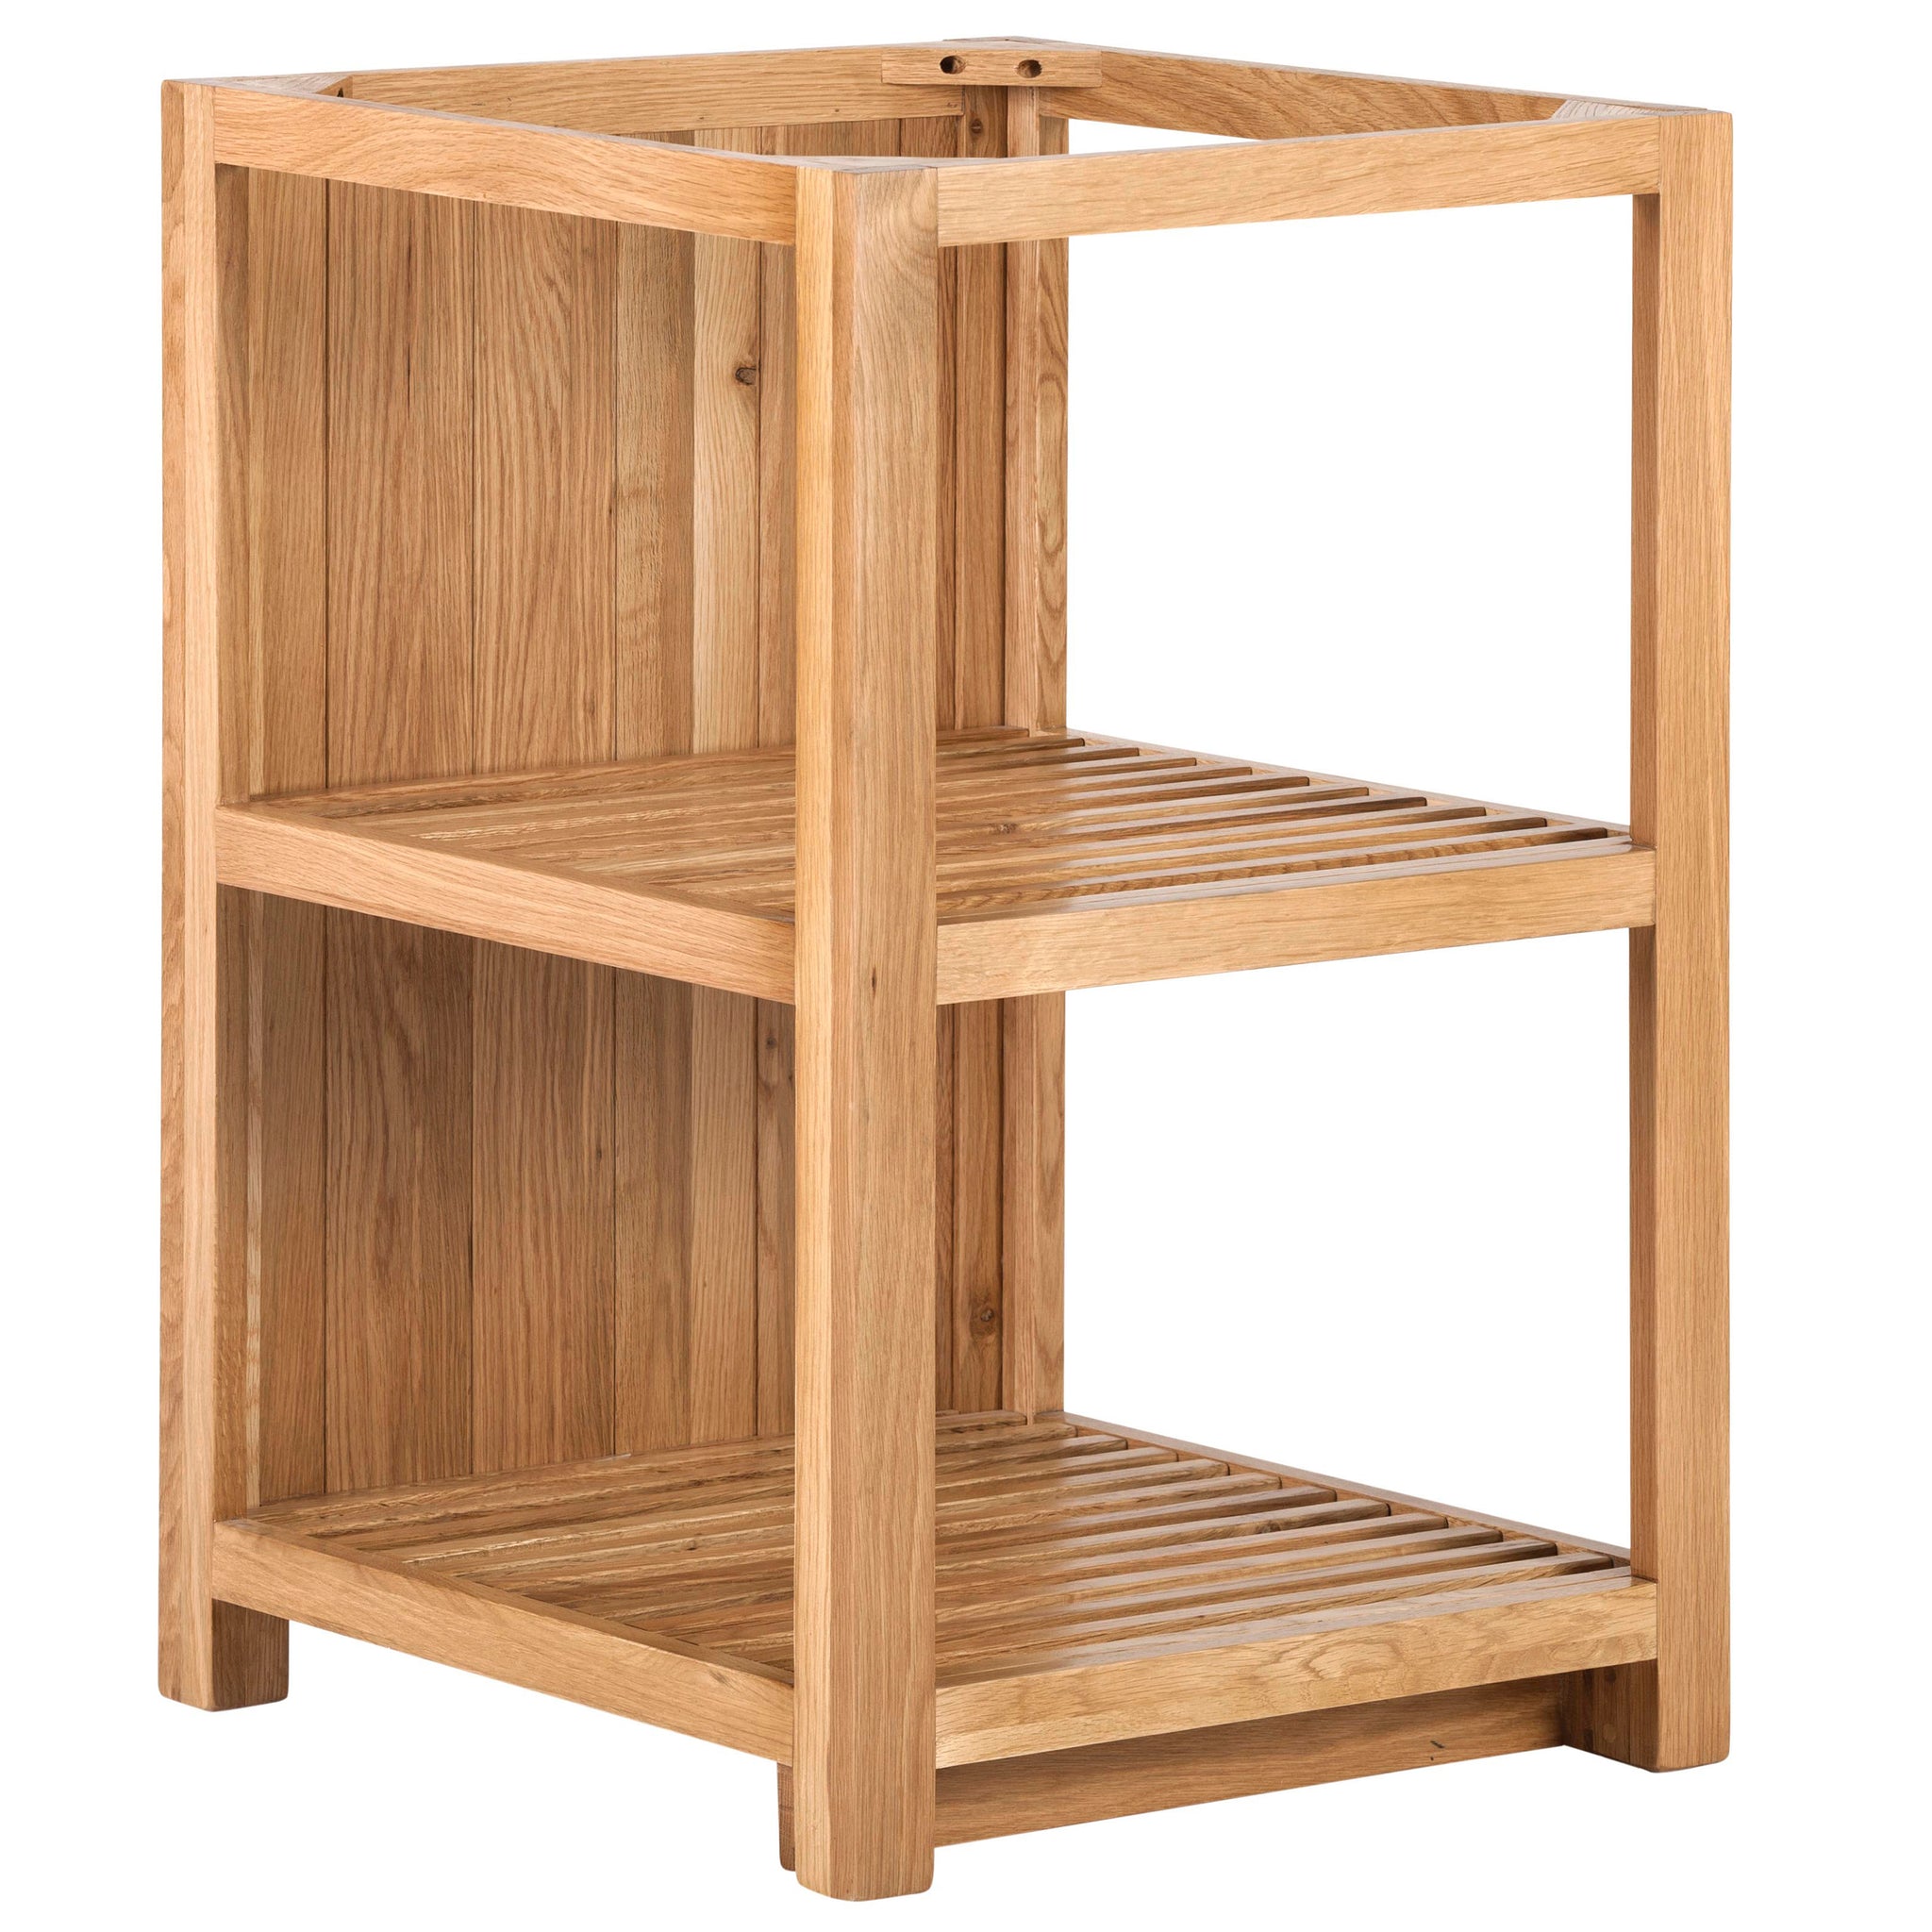 Small Open Slatted Oak Shelf Cabinet with Back Panel – Besp-Oak Kitchens